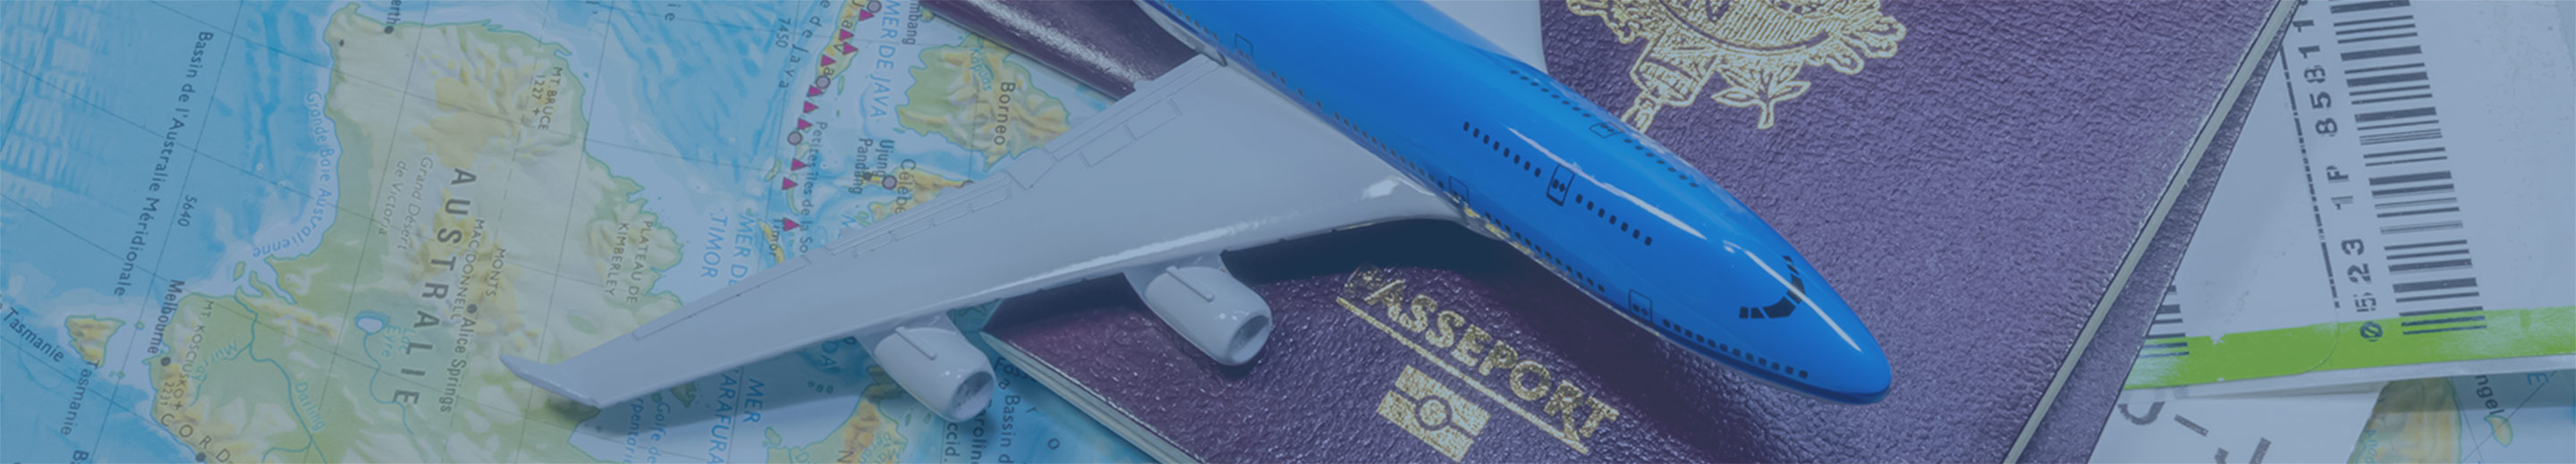 Podróże - mapa, paszport, bilet i samolot-zabawka